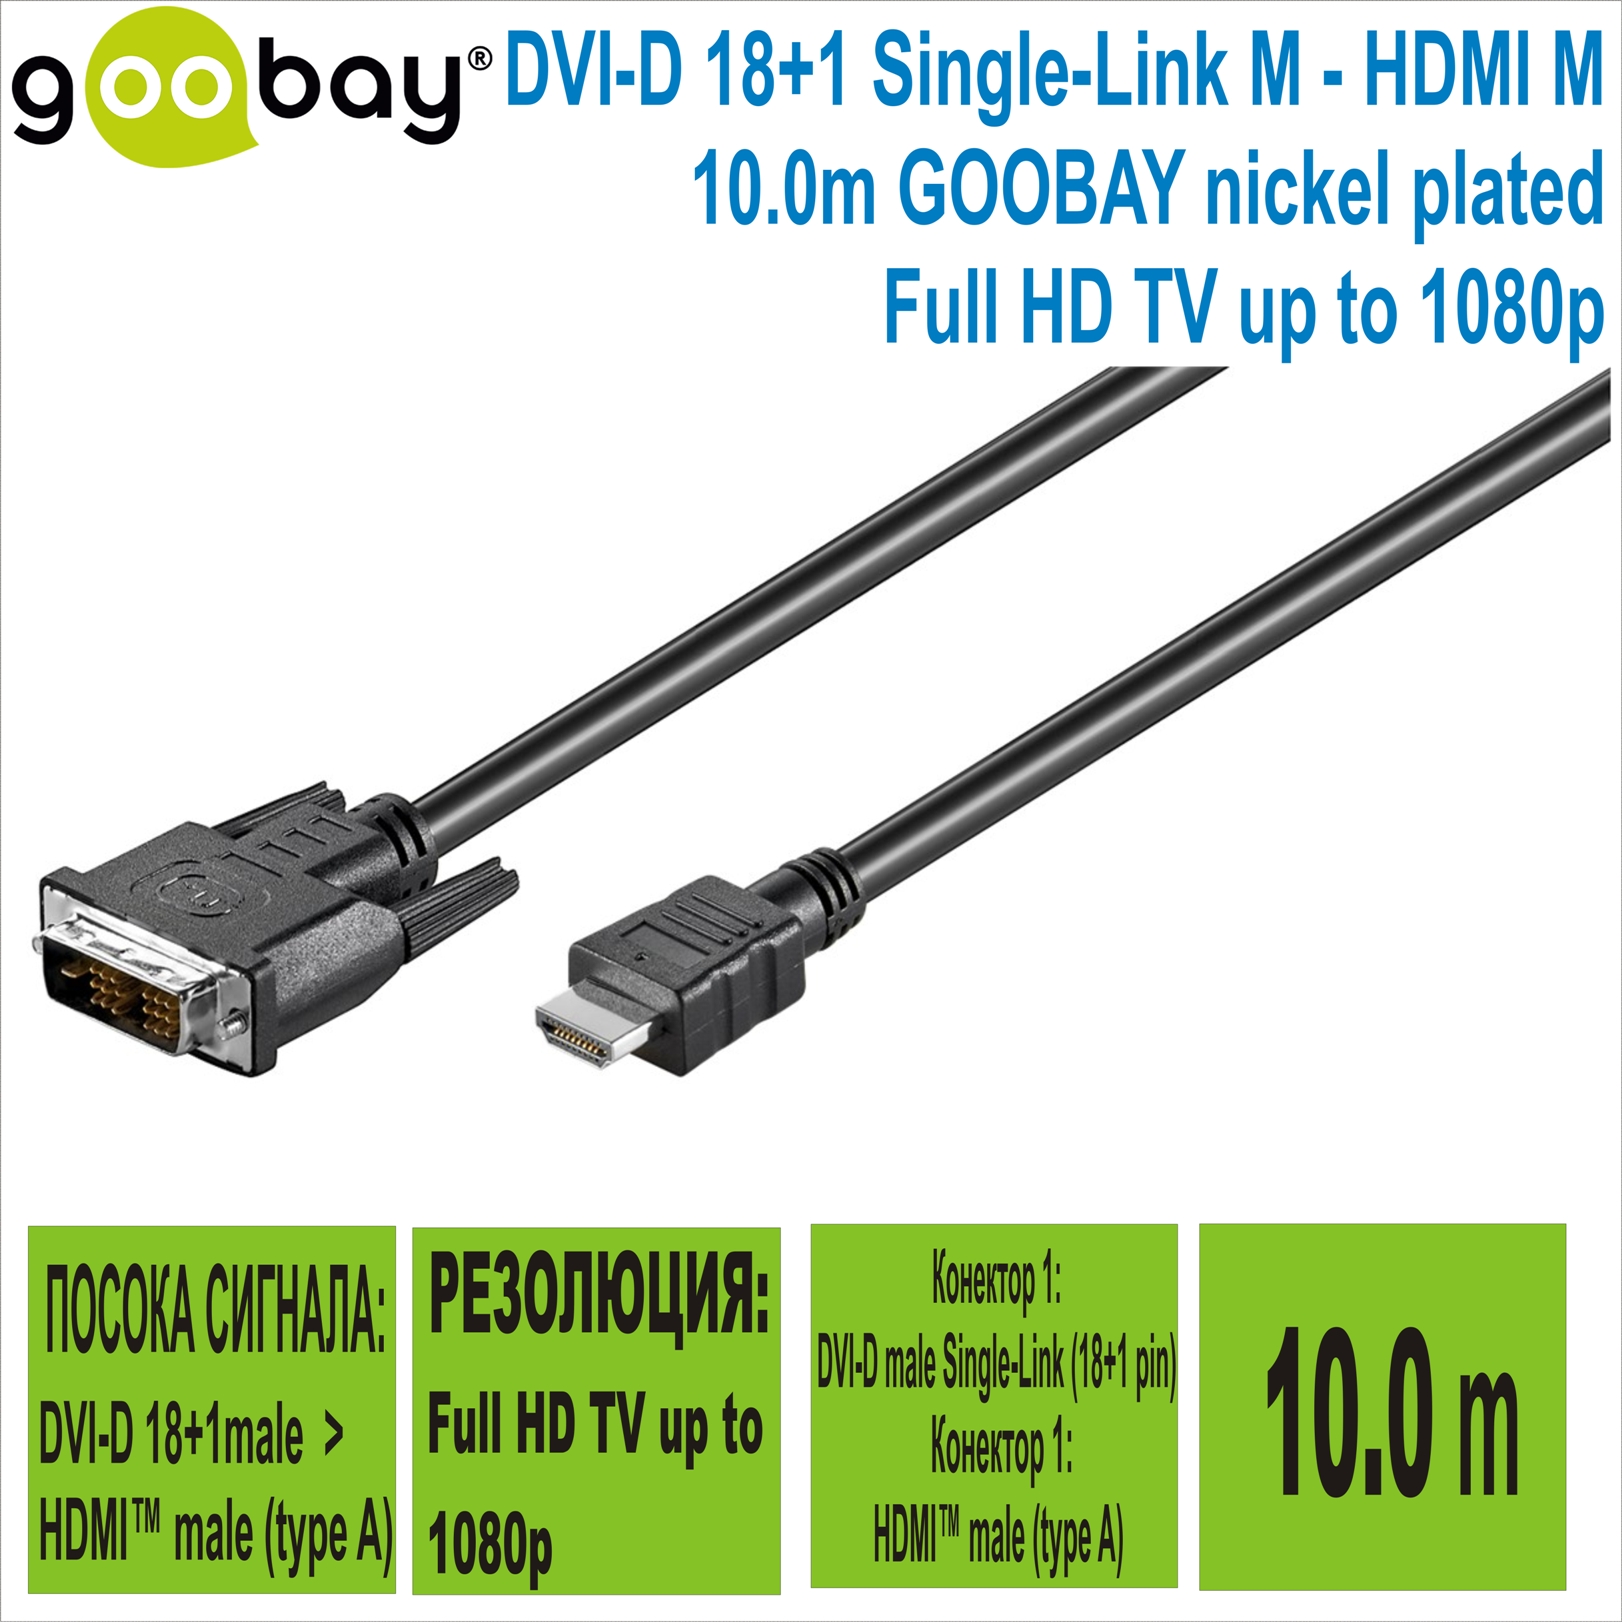 DVI-D male to HDMI M 10.0m nickel GOOBAY